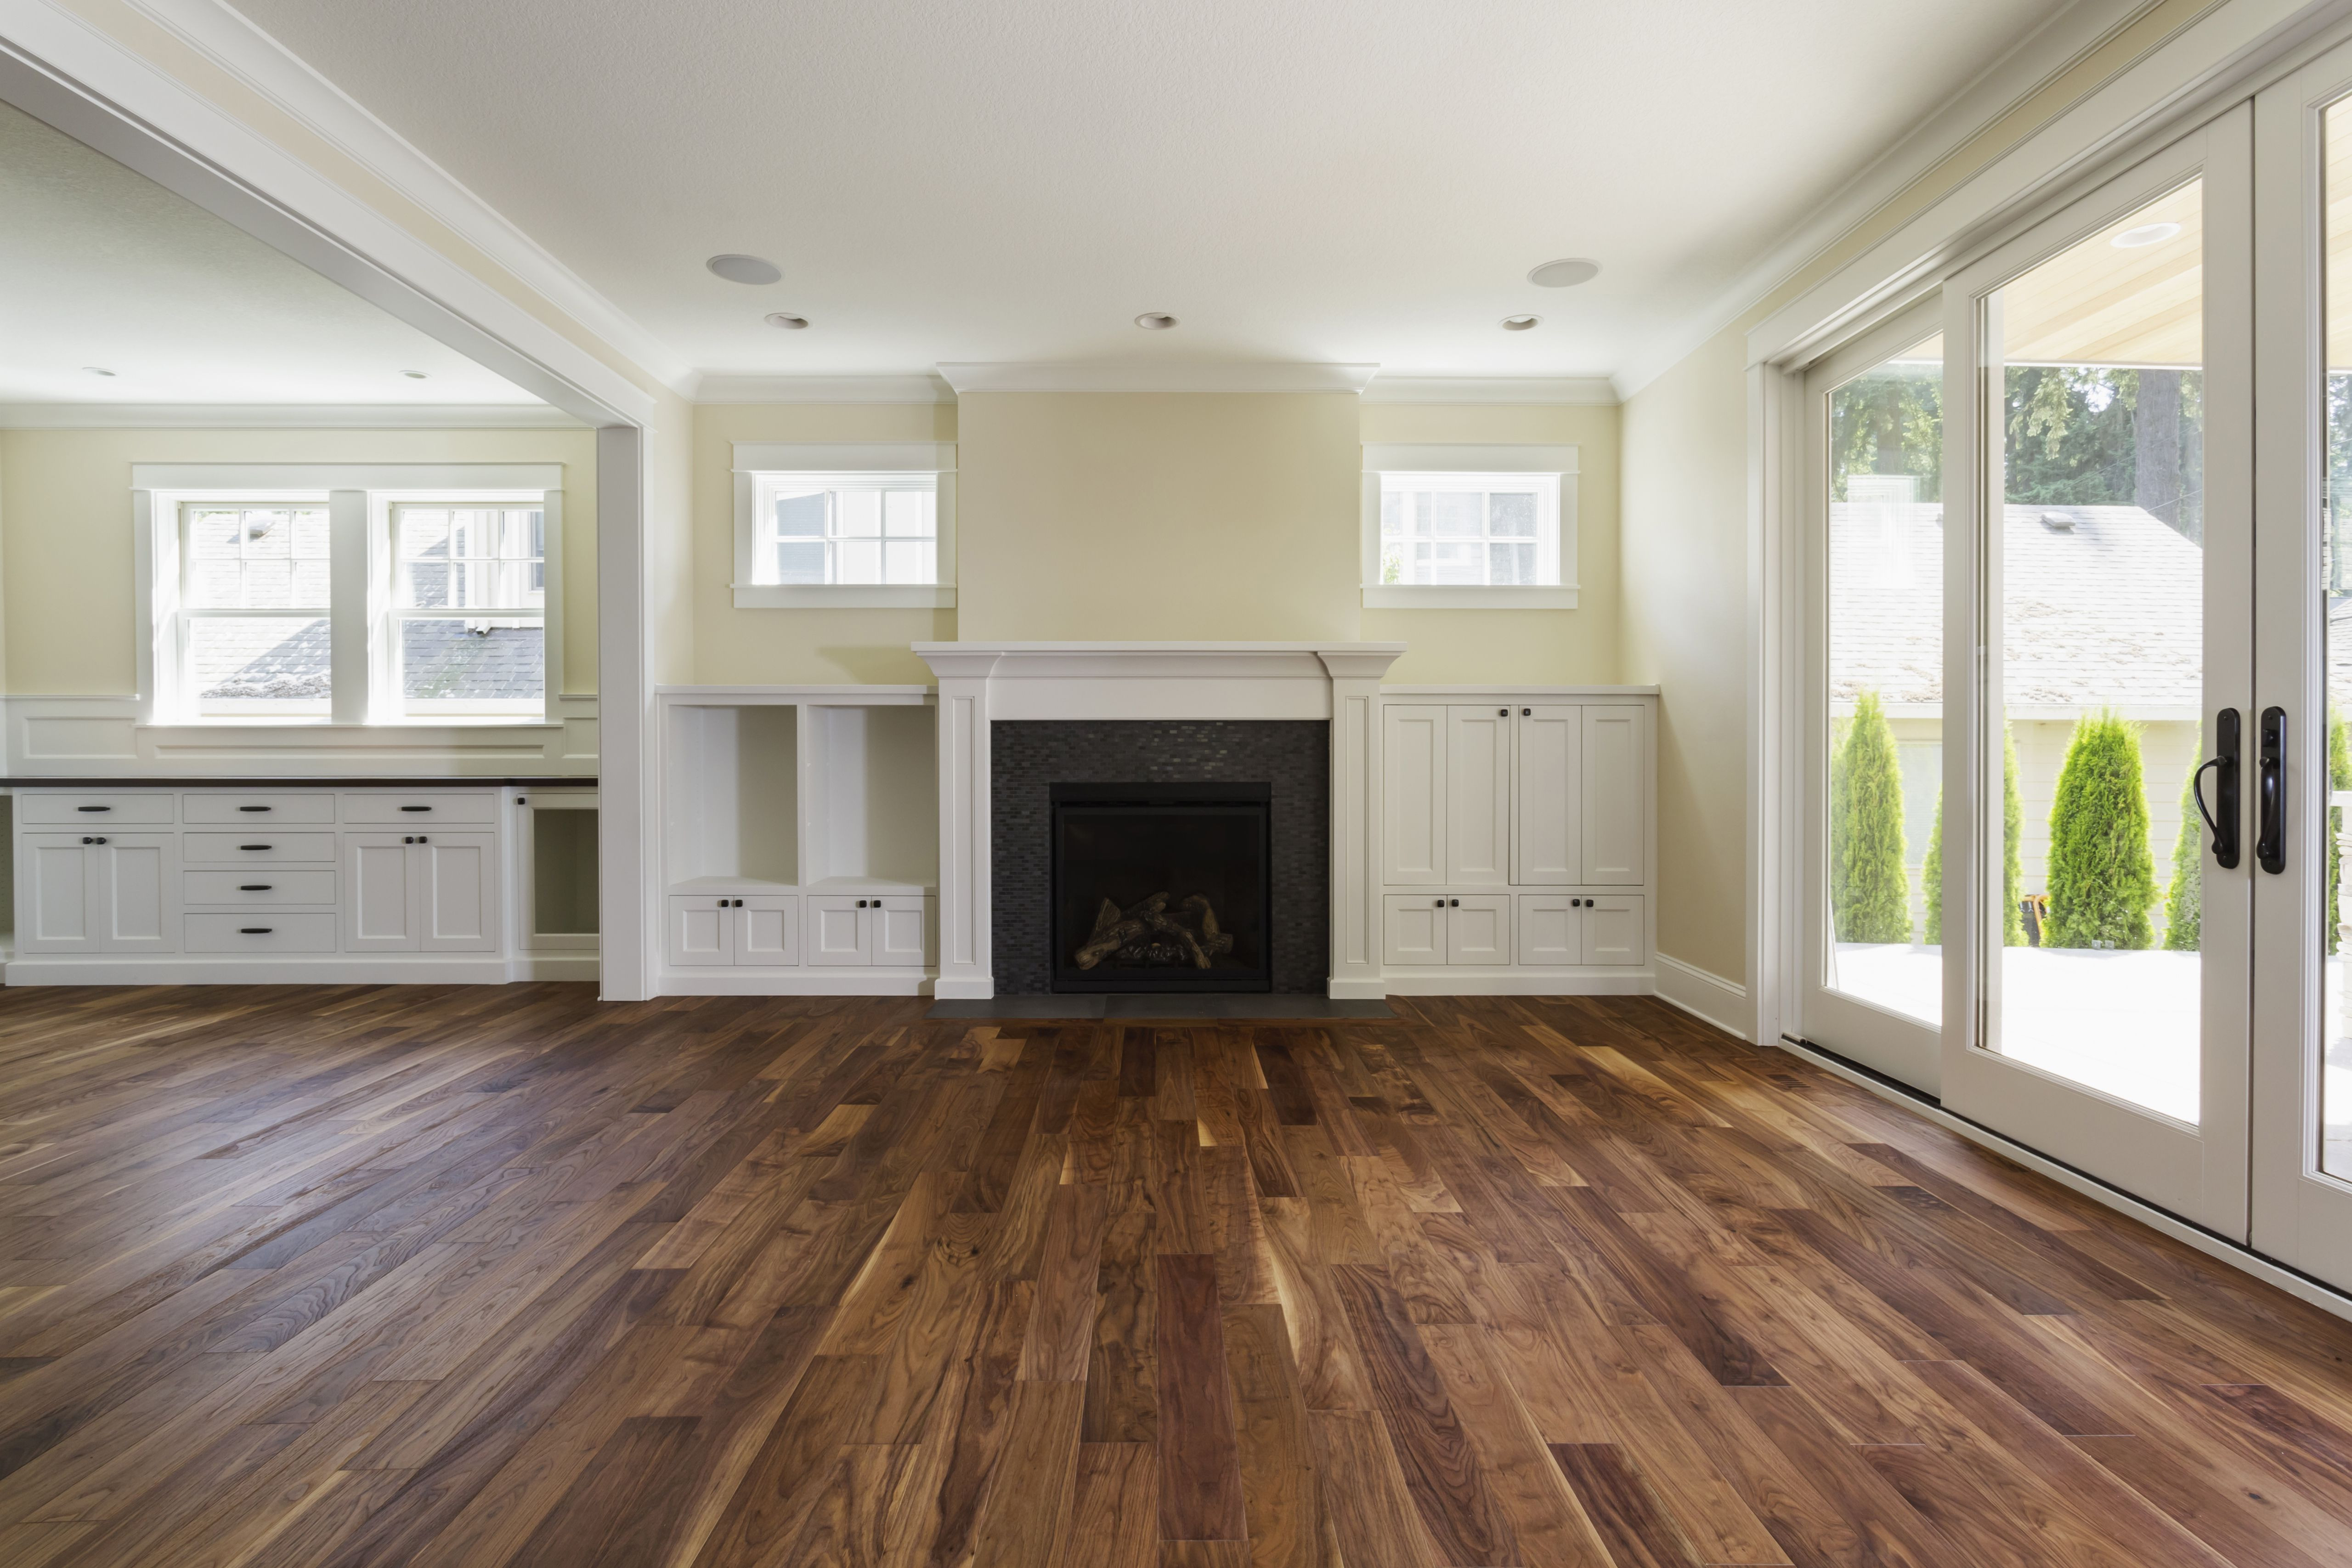 13 Trendy Best Hardwood Floor Sealer 2024 free download best hardwood floor sealer of the pros and cons of prefinished hardwood flooring for fireplace and built in shelves in living room 482143011 57bef8e33df78cc16e035397